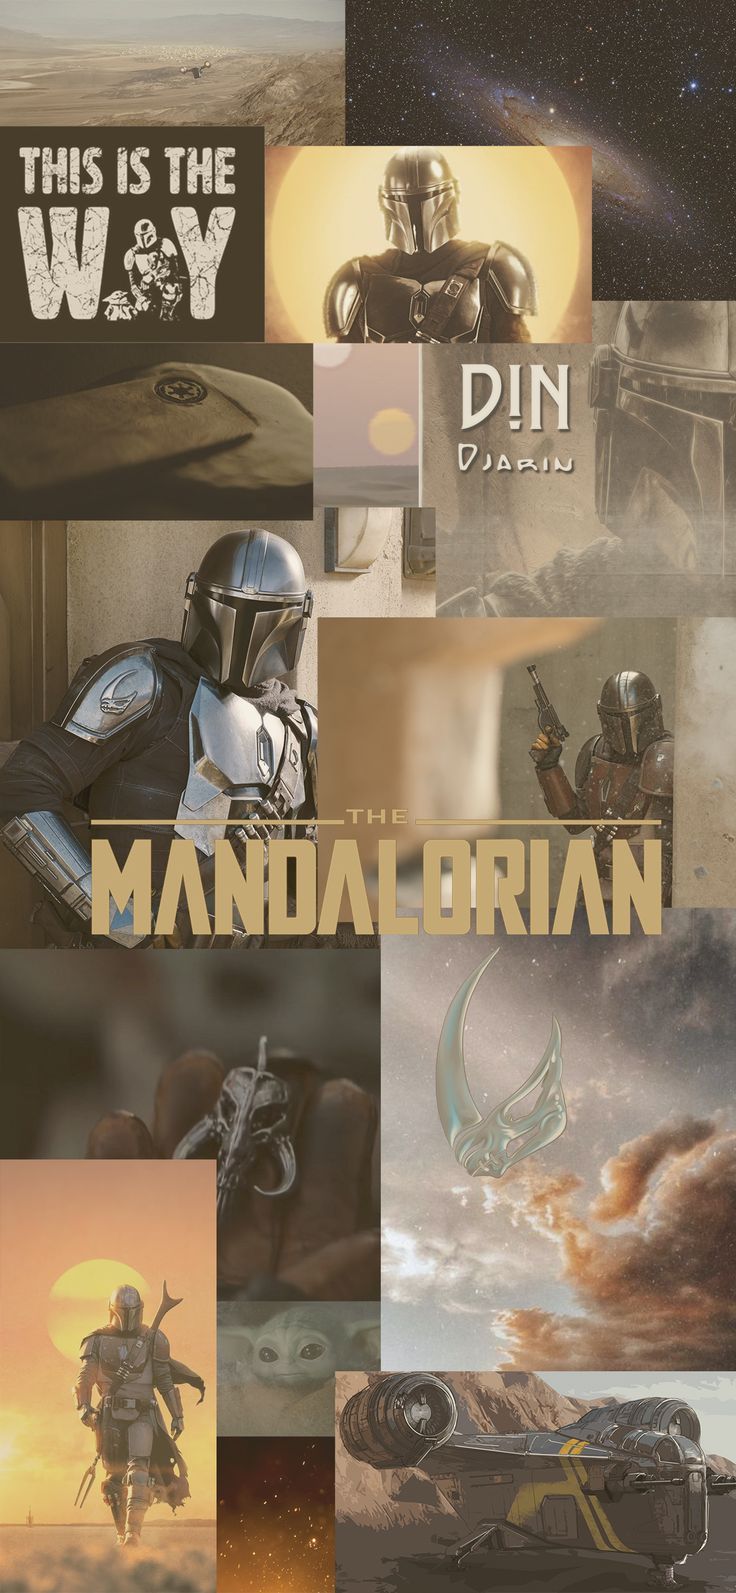  Mandalorian Hintergrundbild 736x1593. The Mandalorian aesthetic. Star wars movies posters, Star wars image, Star wars background